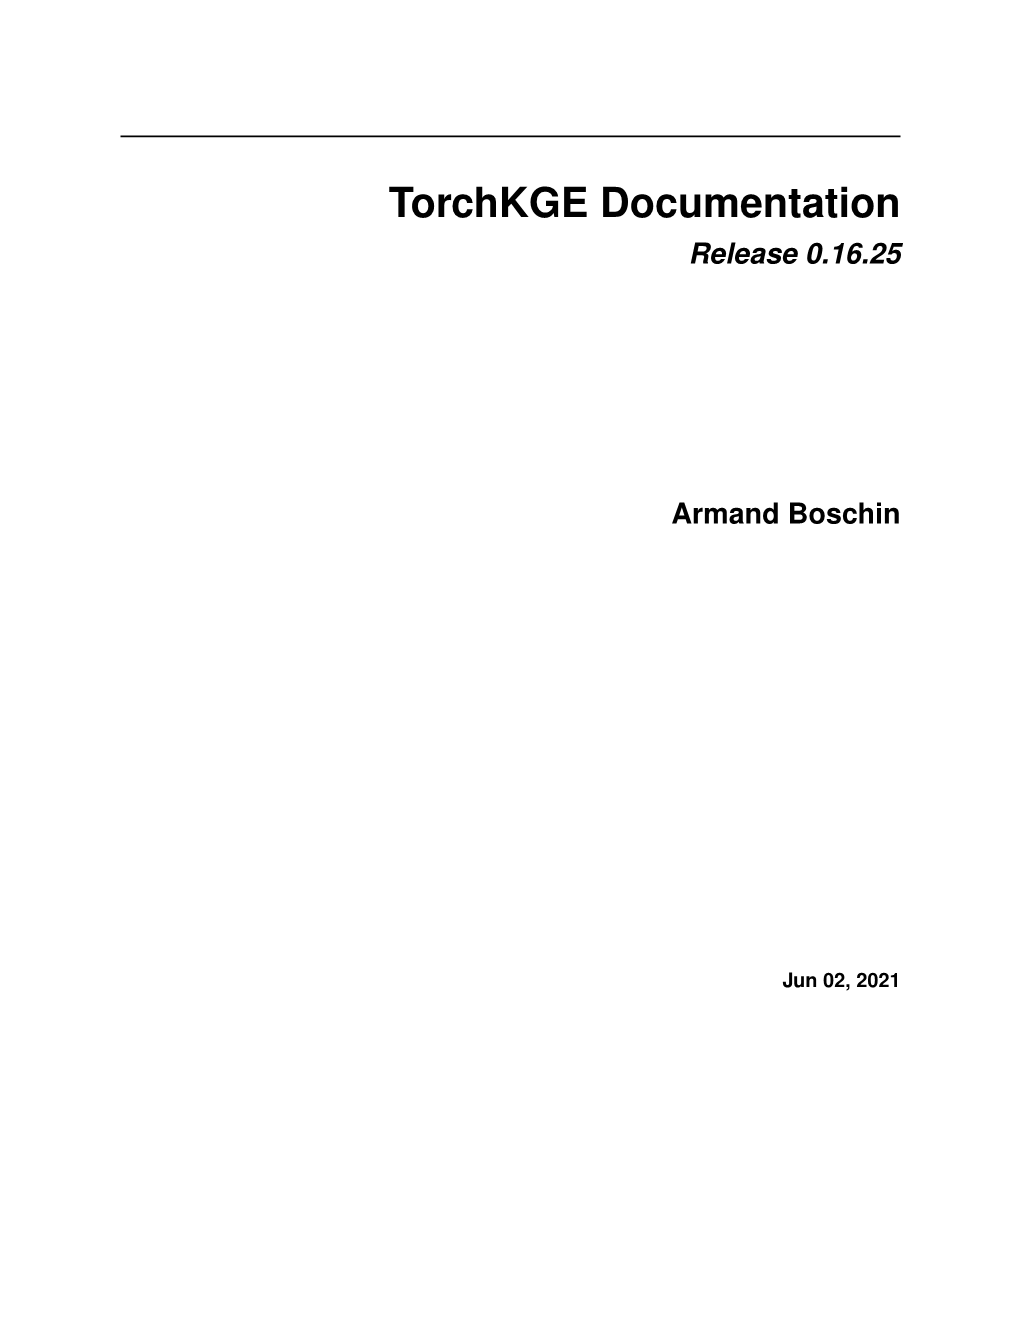 Torchkge Documentation Release 0.16.25